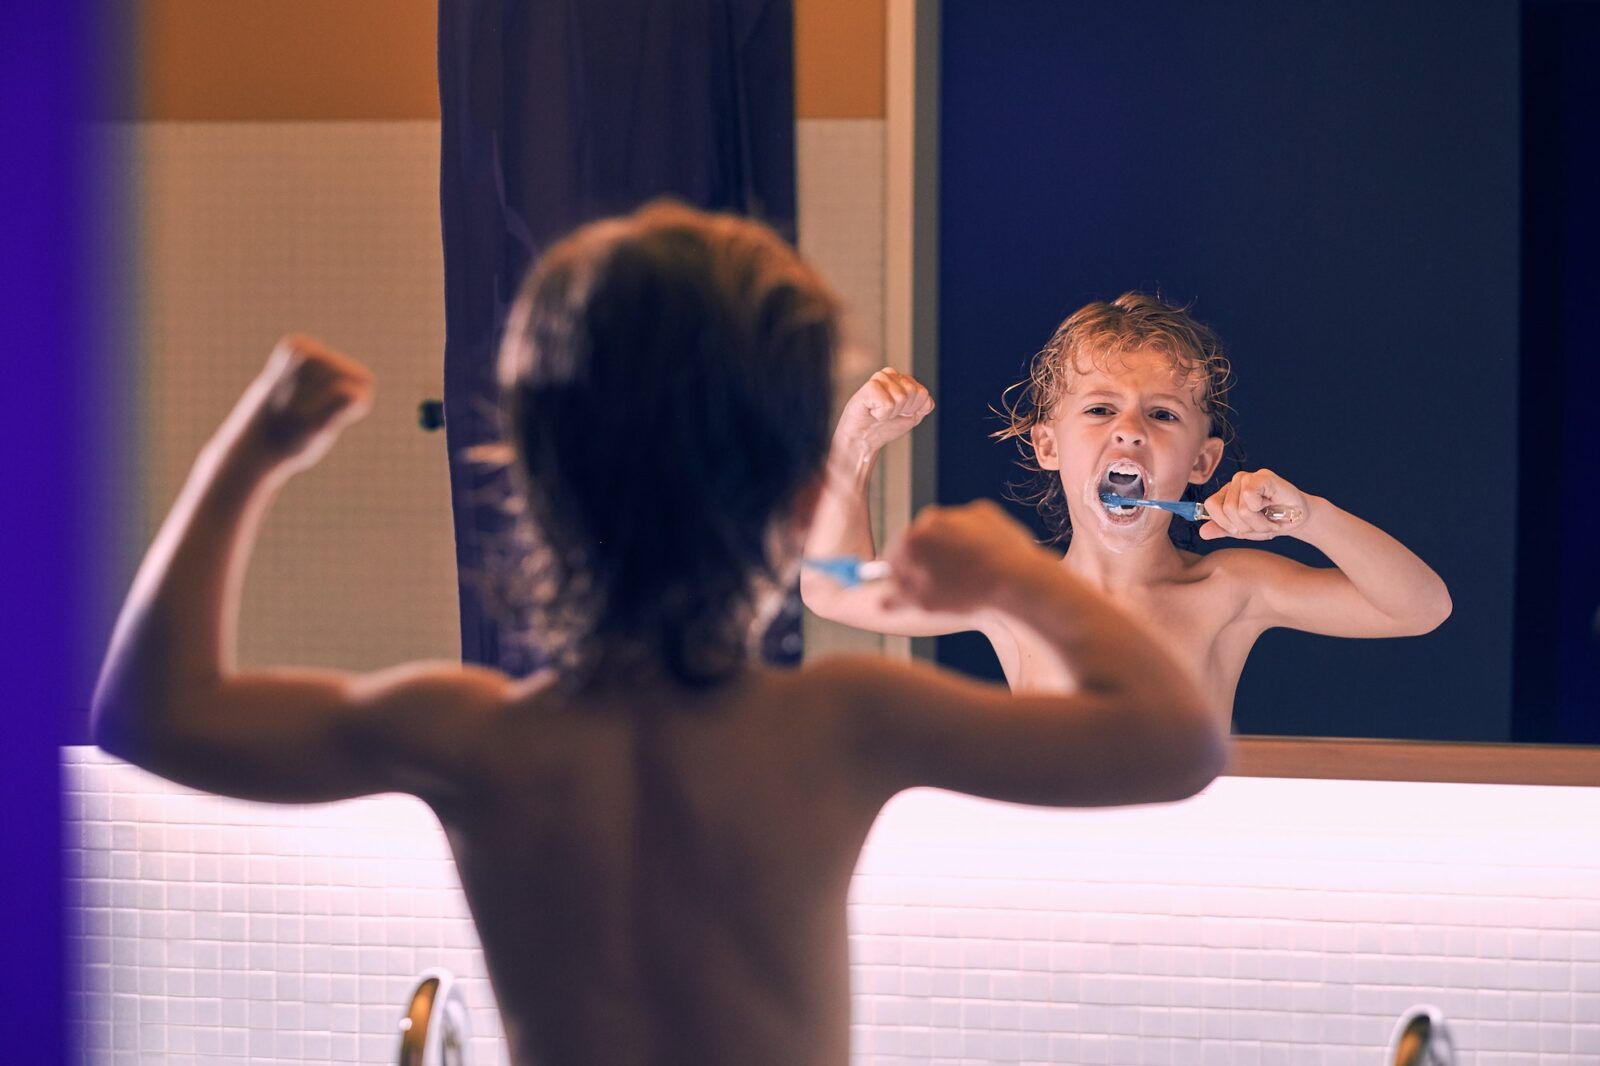 Angry boy raising fist while brushing teeth